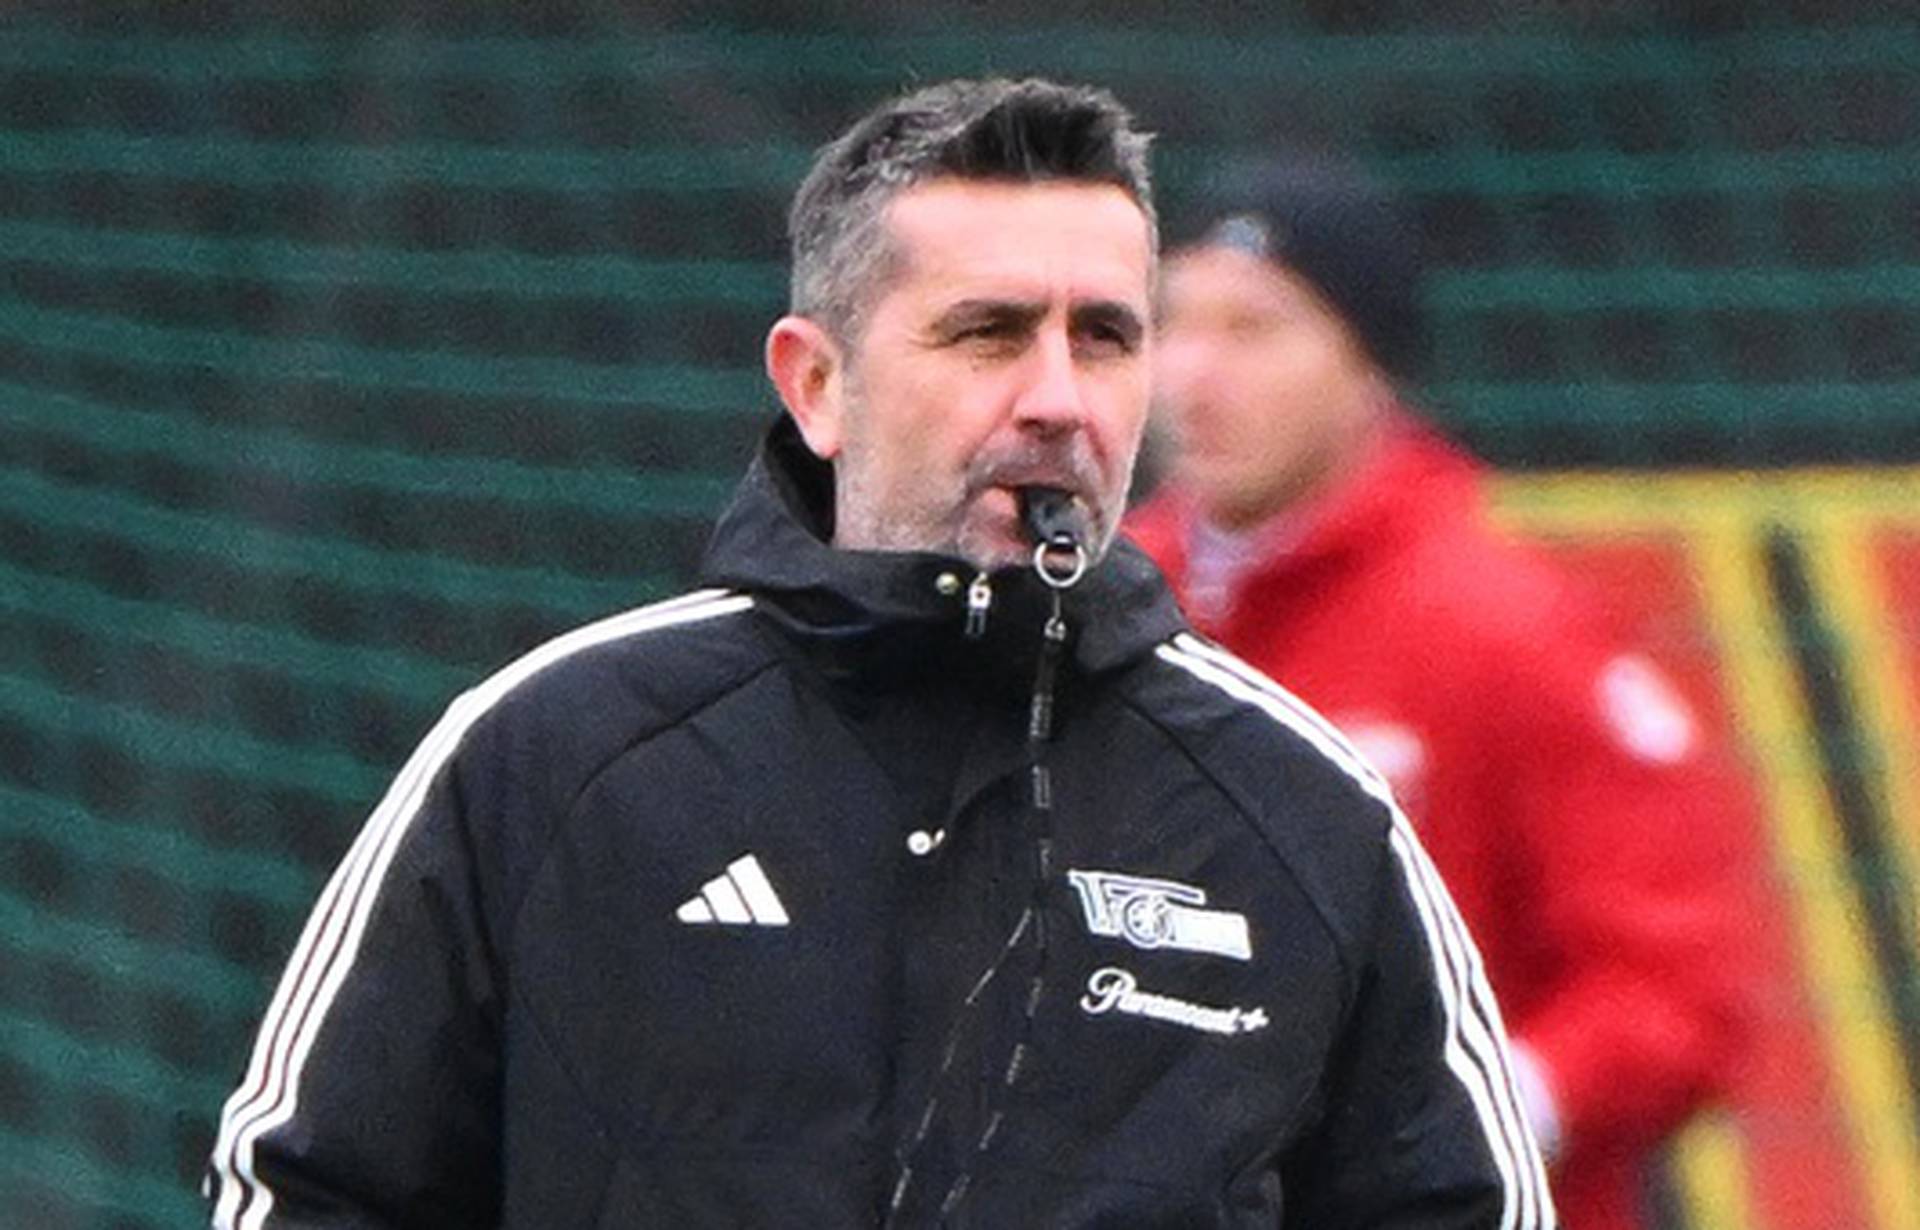 Union Berlin's new coach Nenad Bjelica